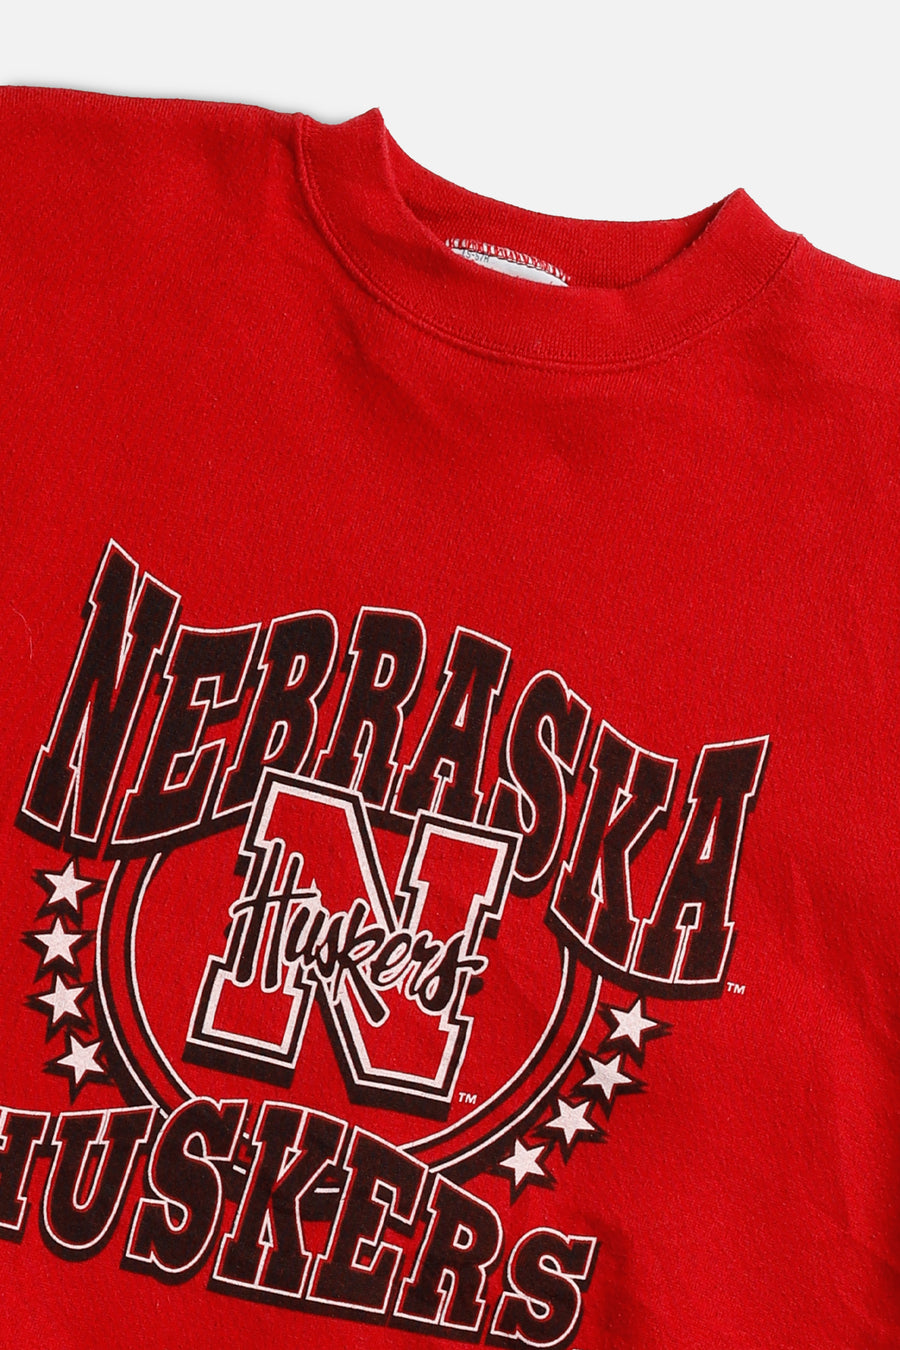 Vintage Nebraska Cornhuskers Sweatshirt - M